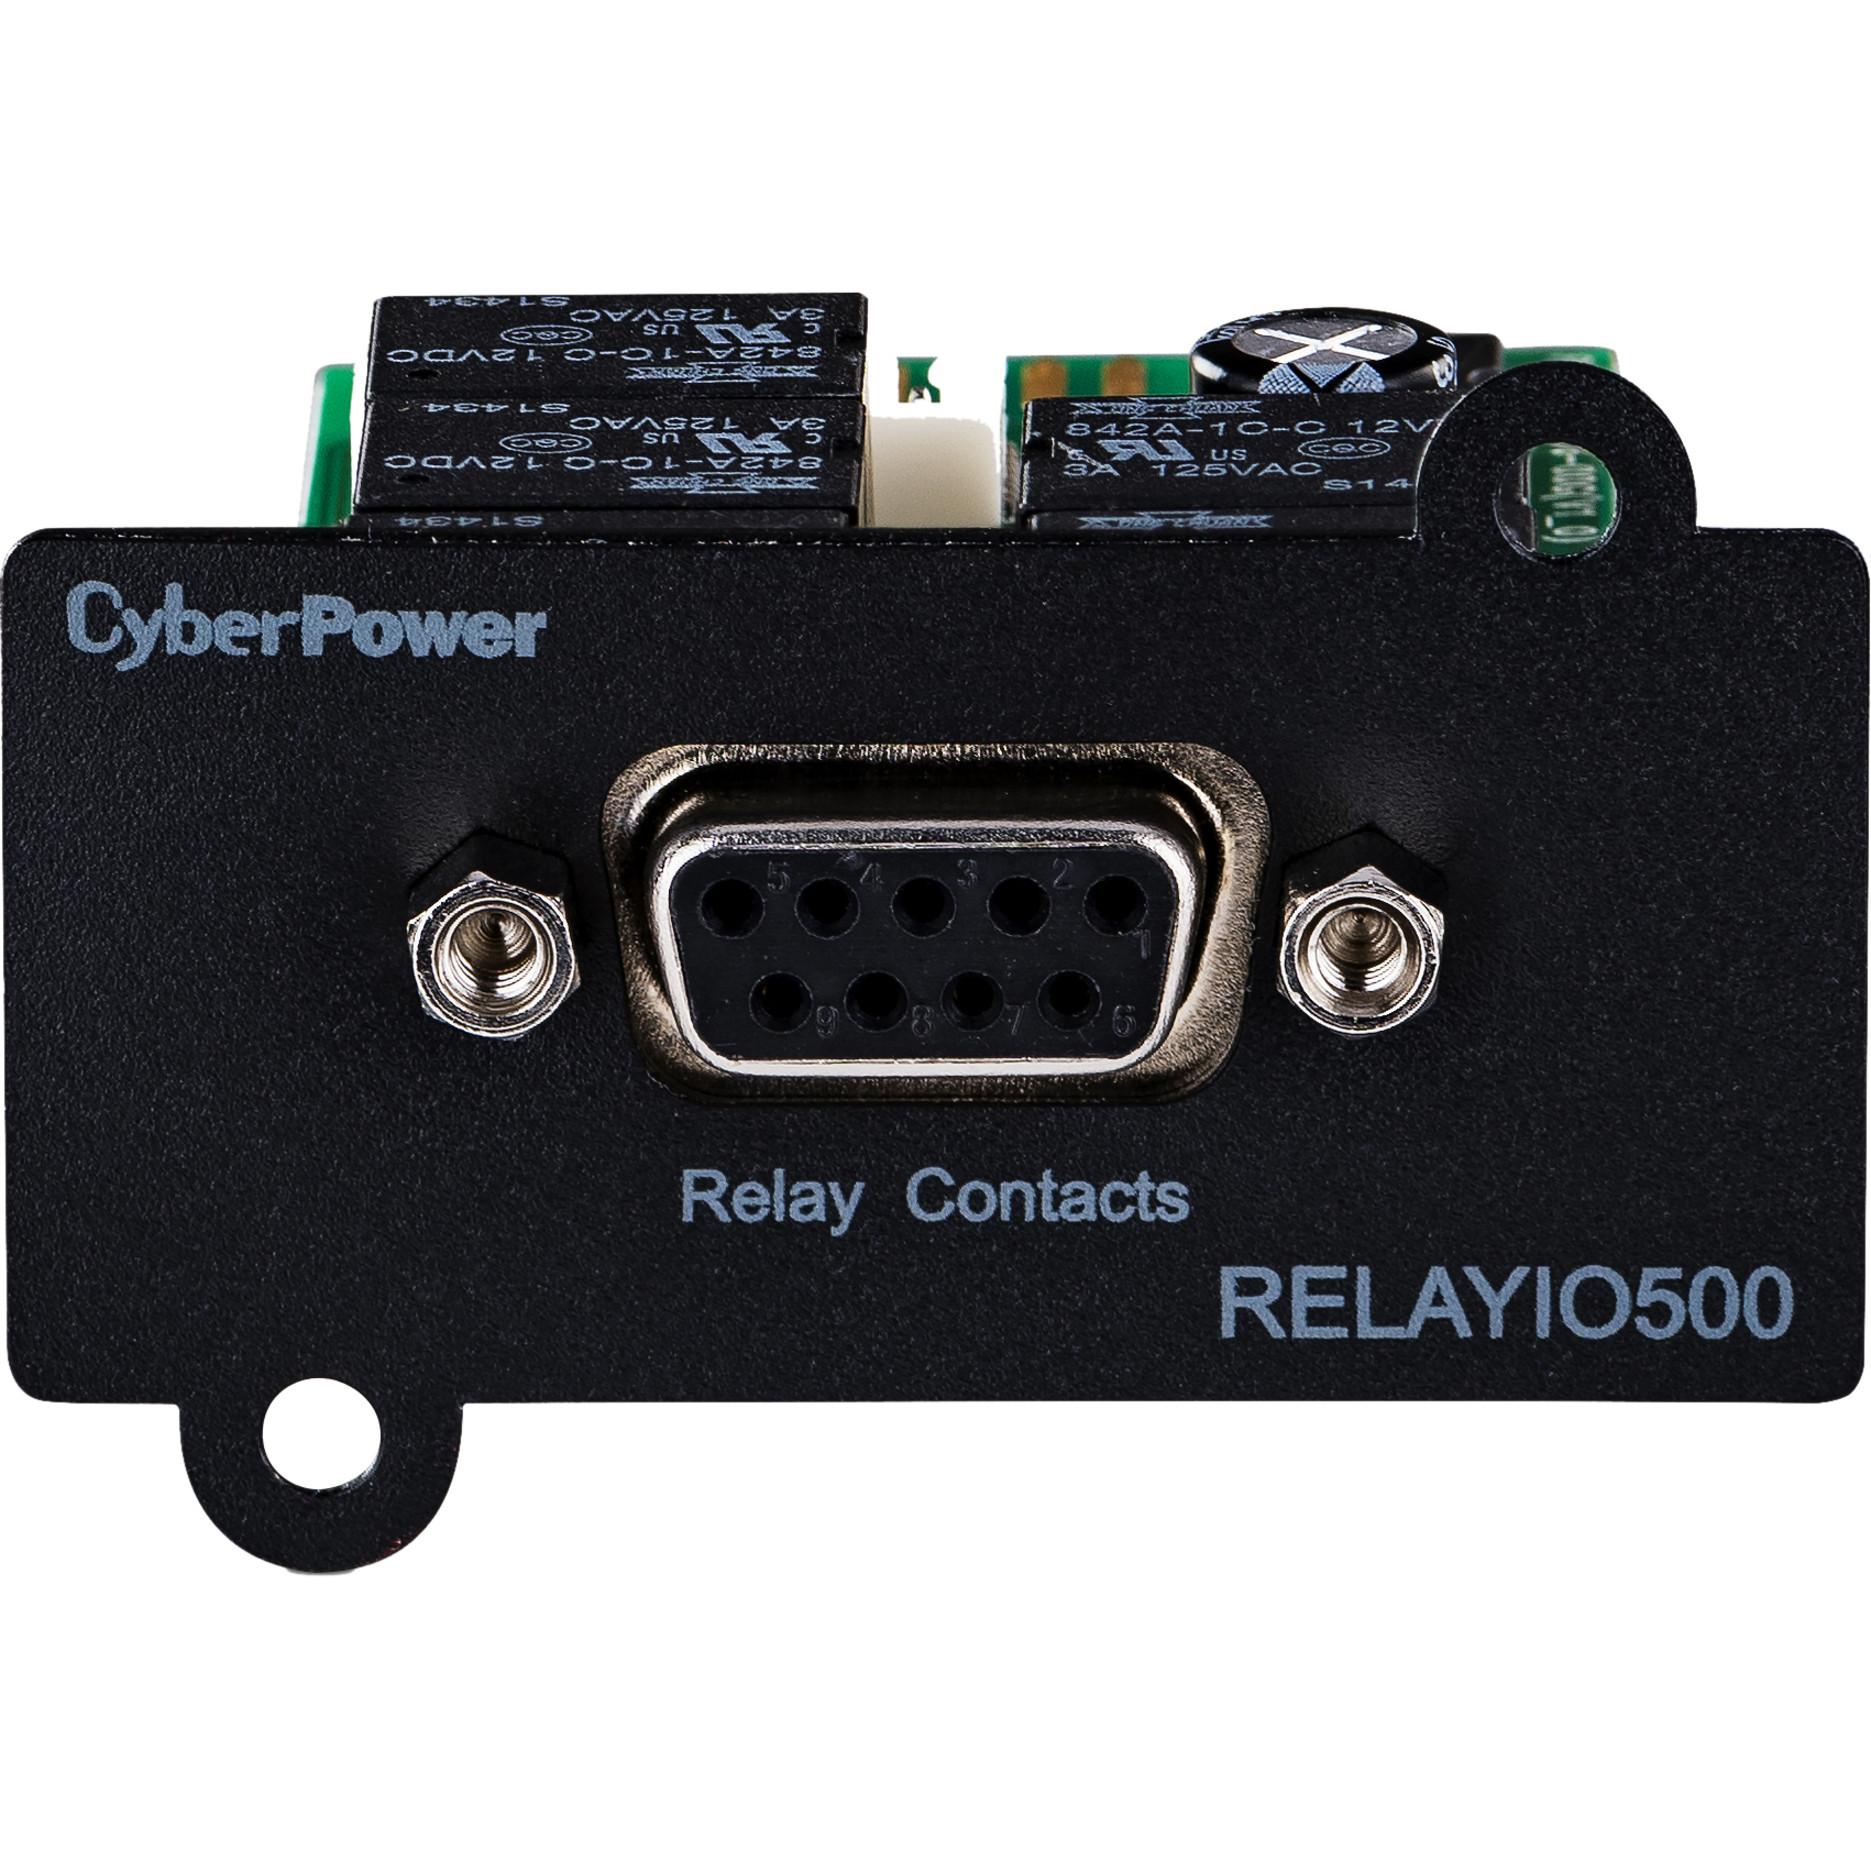 Cyber Power RELAYIO500 Network Management CardBlack  WarrantyHardware & Accessories RELAYIO500